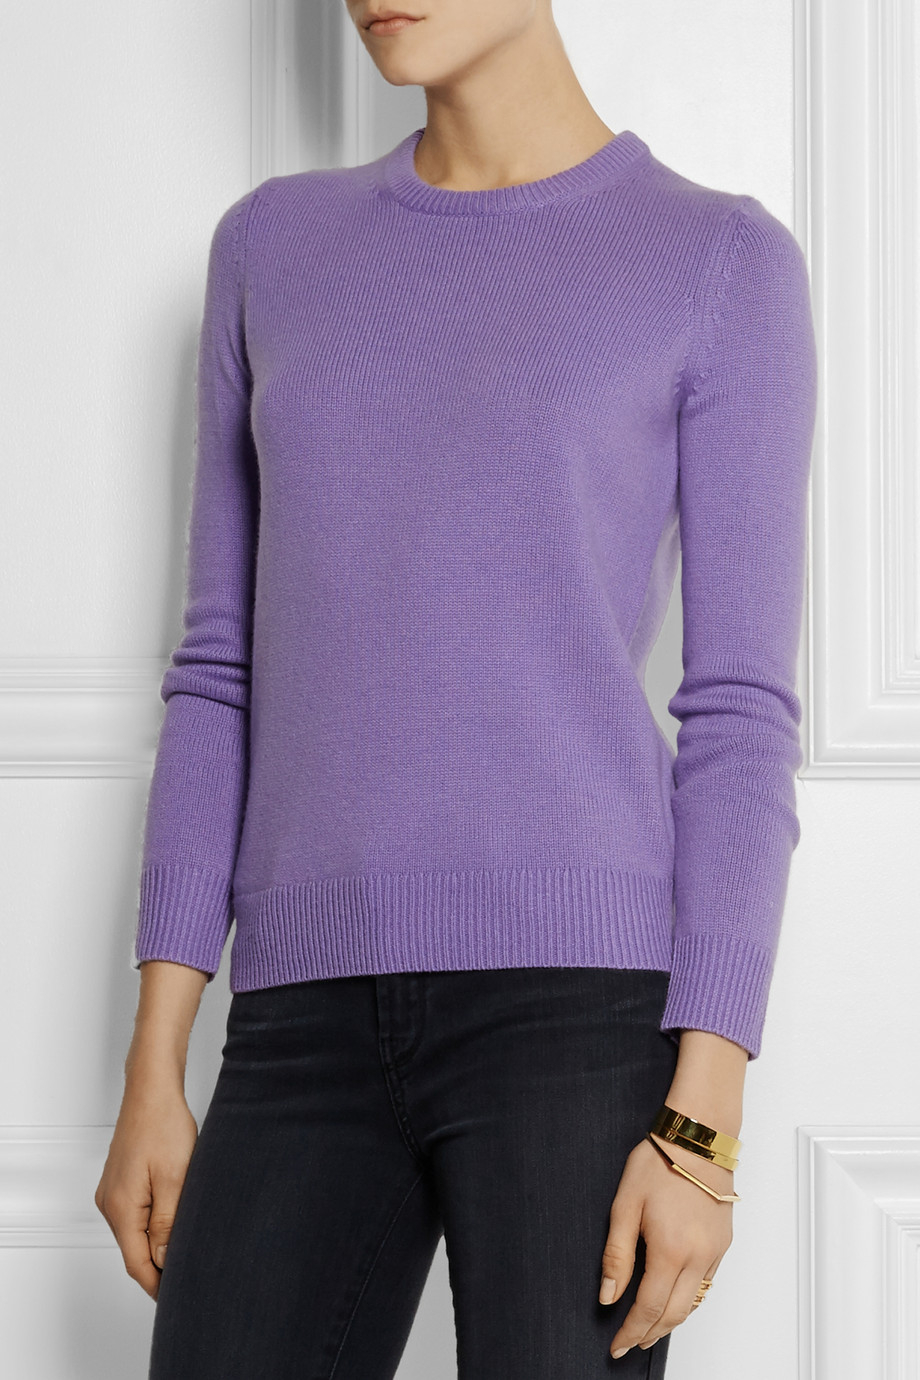 Michael kors Cashmere Sweater in Purple | Lyst